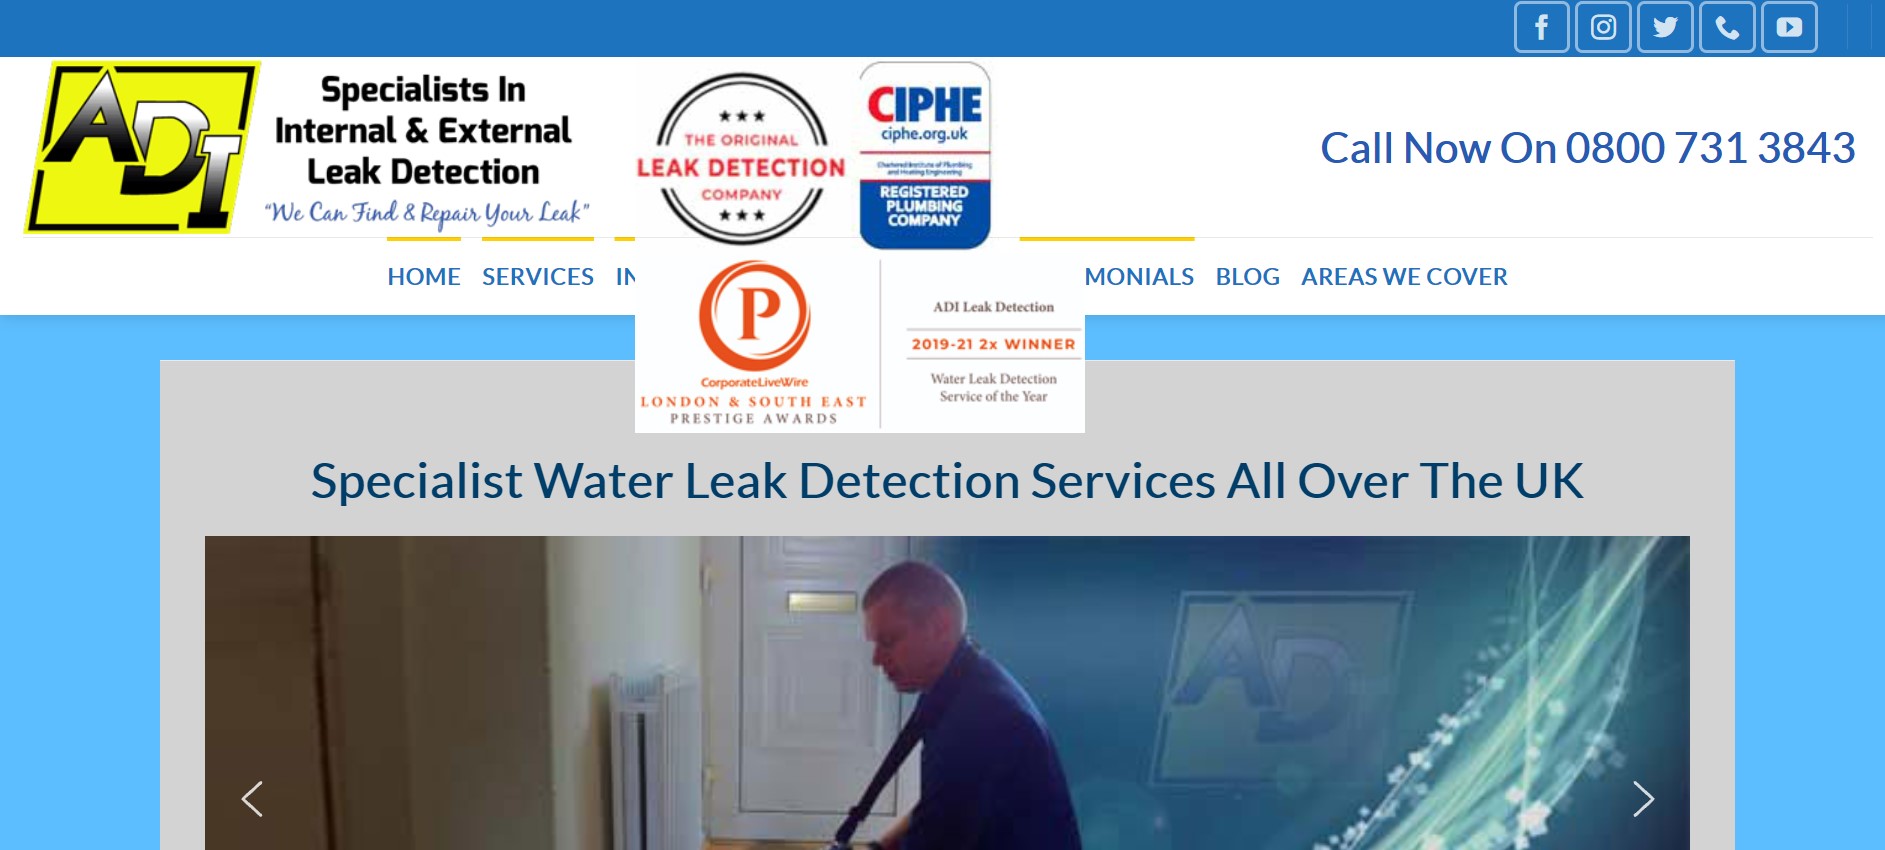 adi leak detection